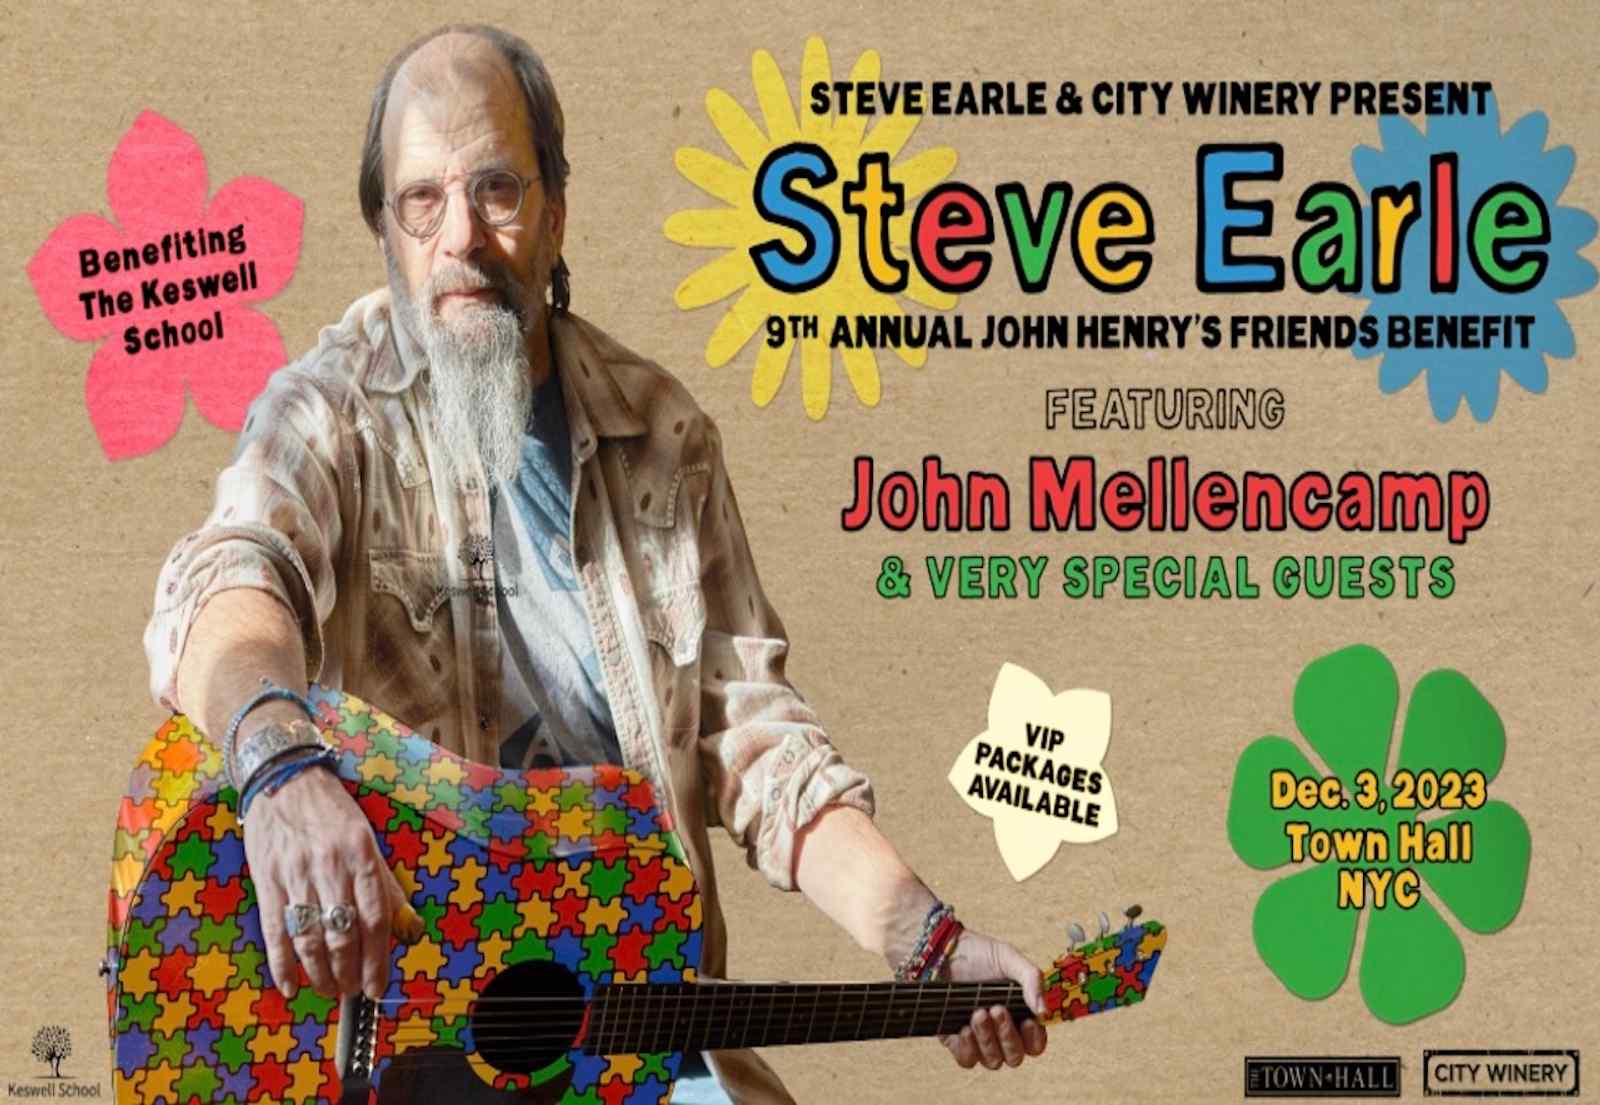 Steve Earle 9th Annual John Henry's Friends Benefit Concert Featuring John Mellencamp